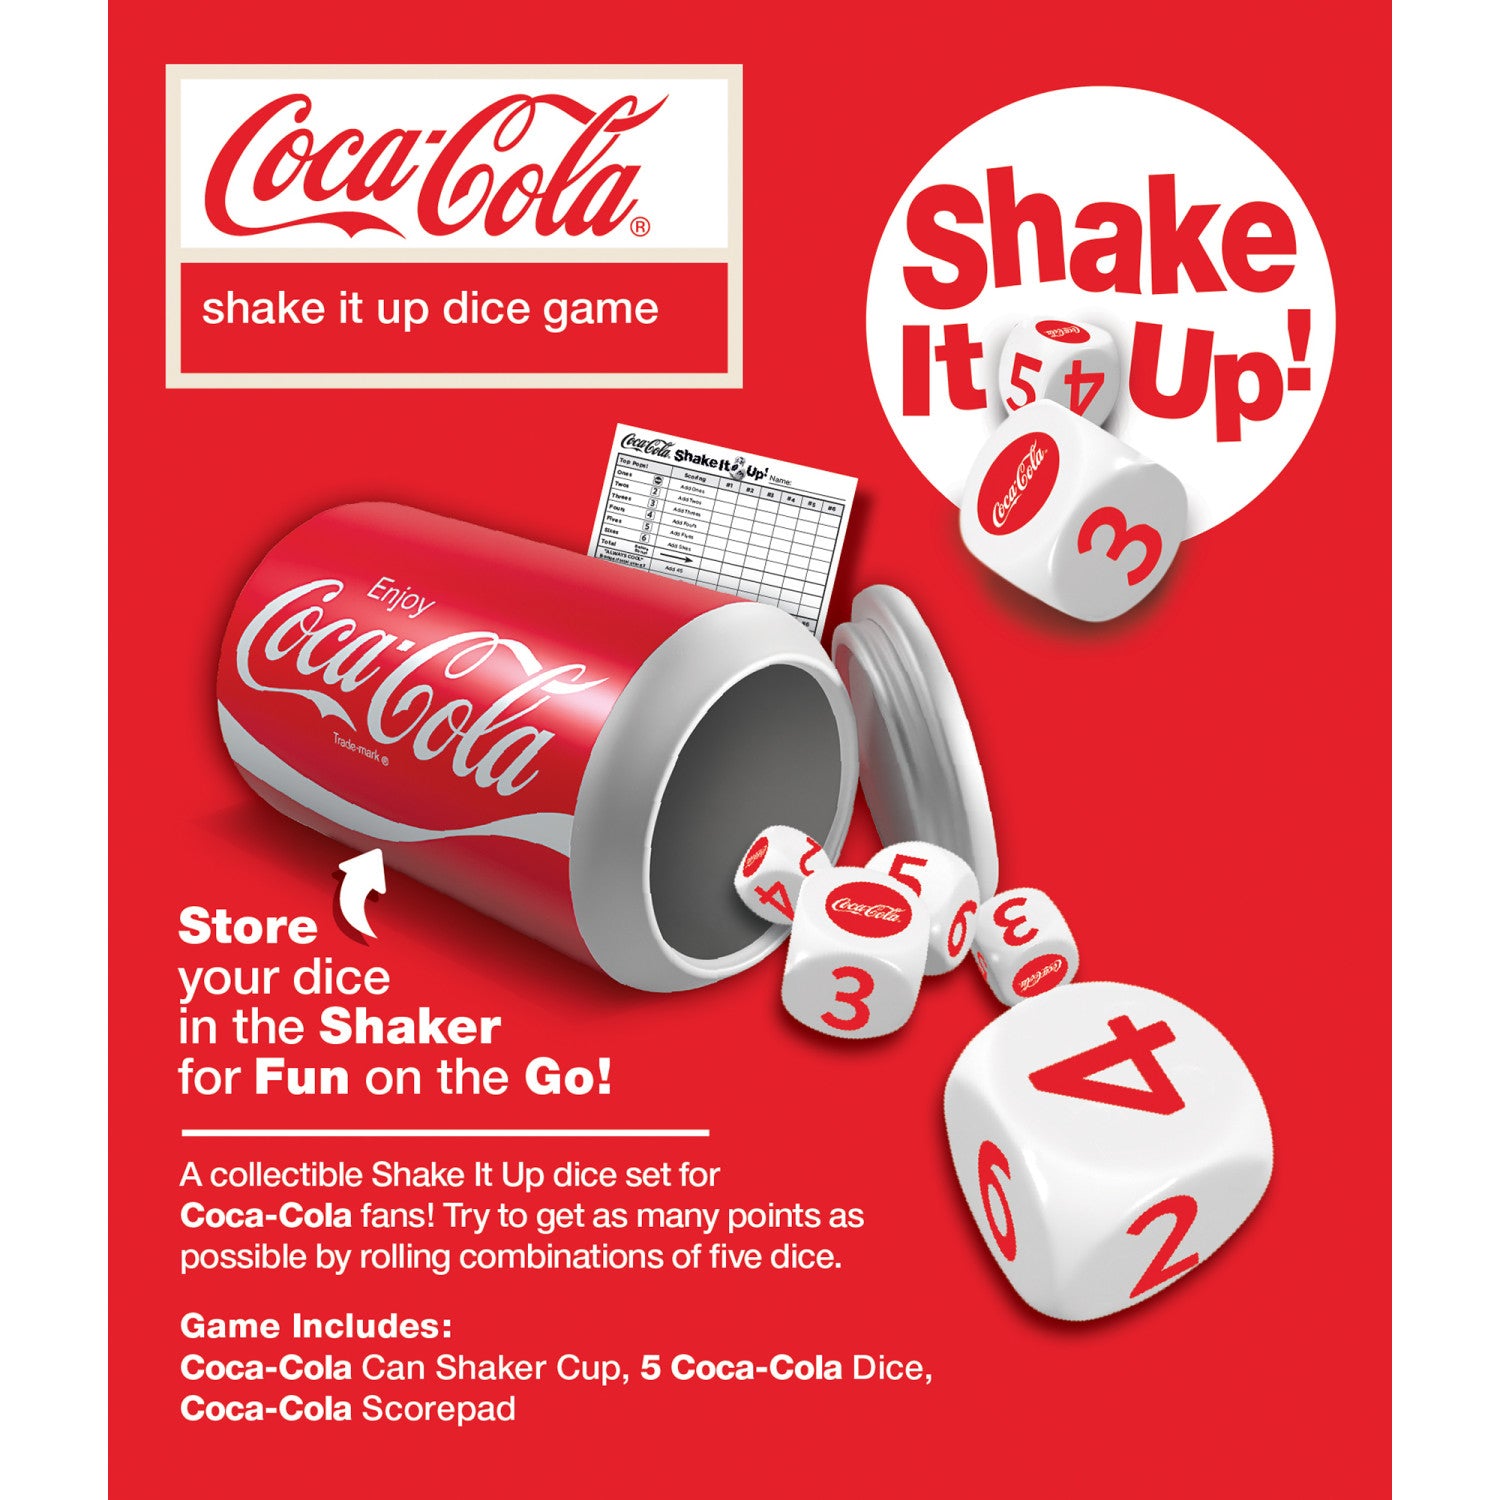 Coca-Cola Shake It Up!